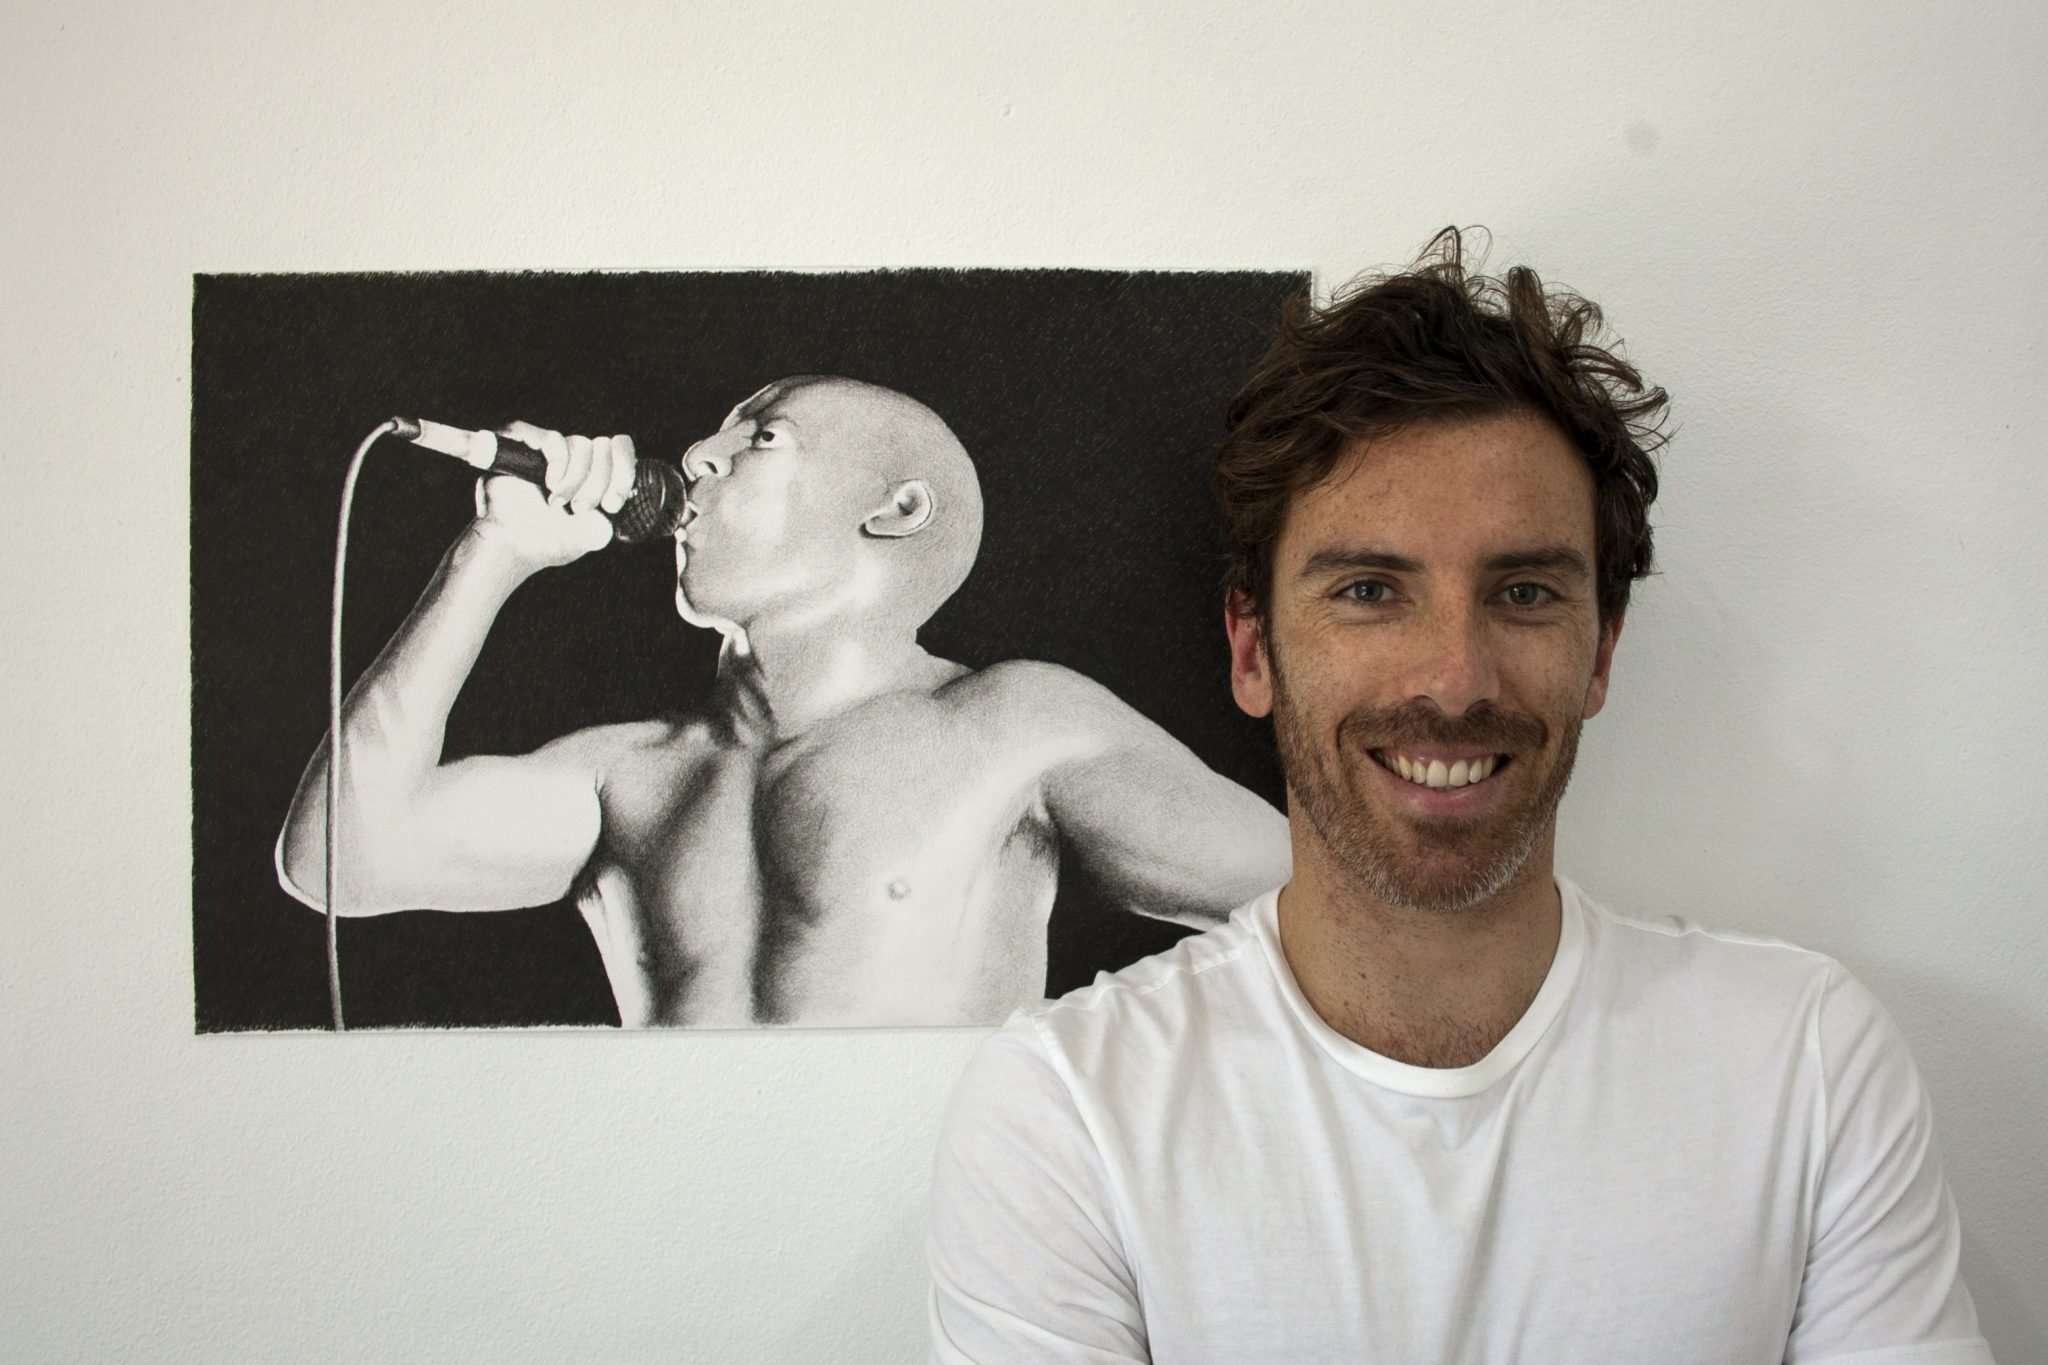 Artist Dean Spinks with his portrait of Maynard James Keenan